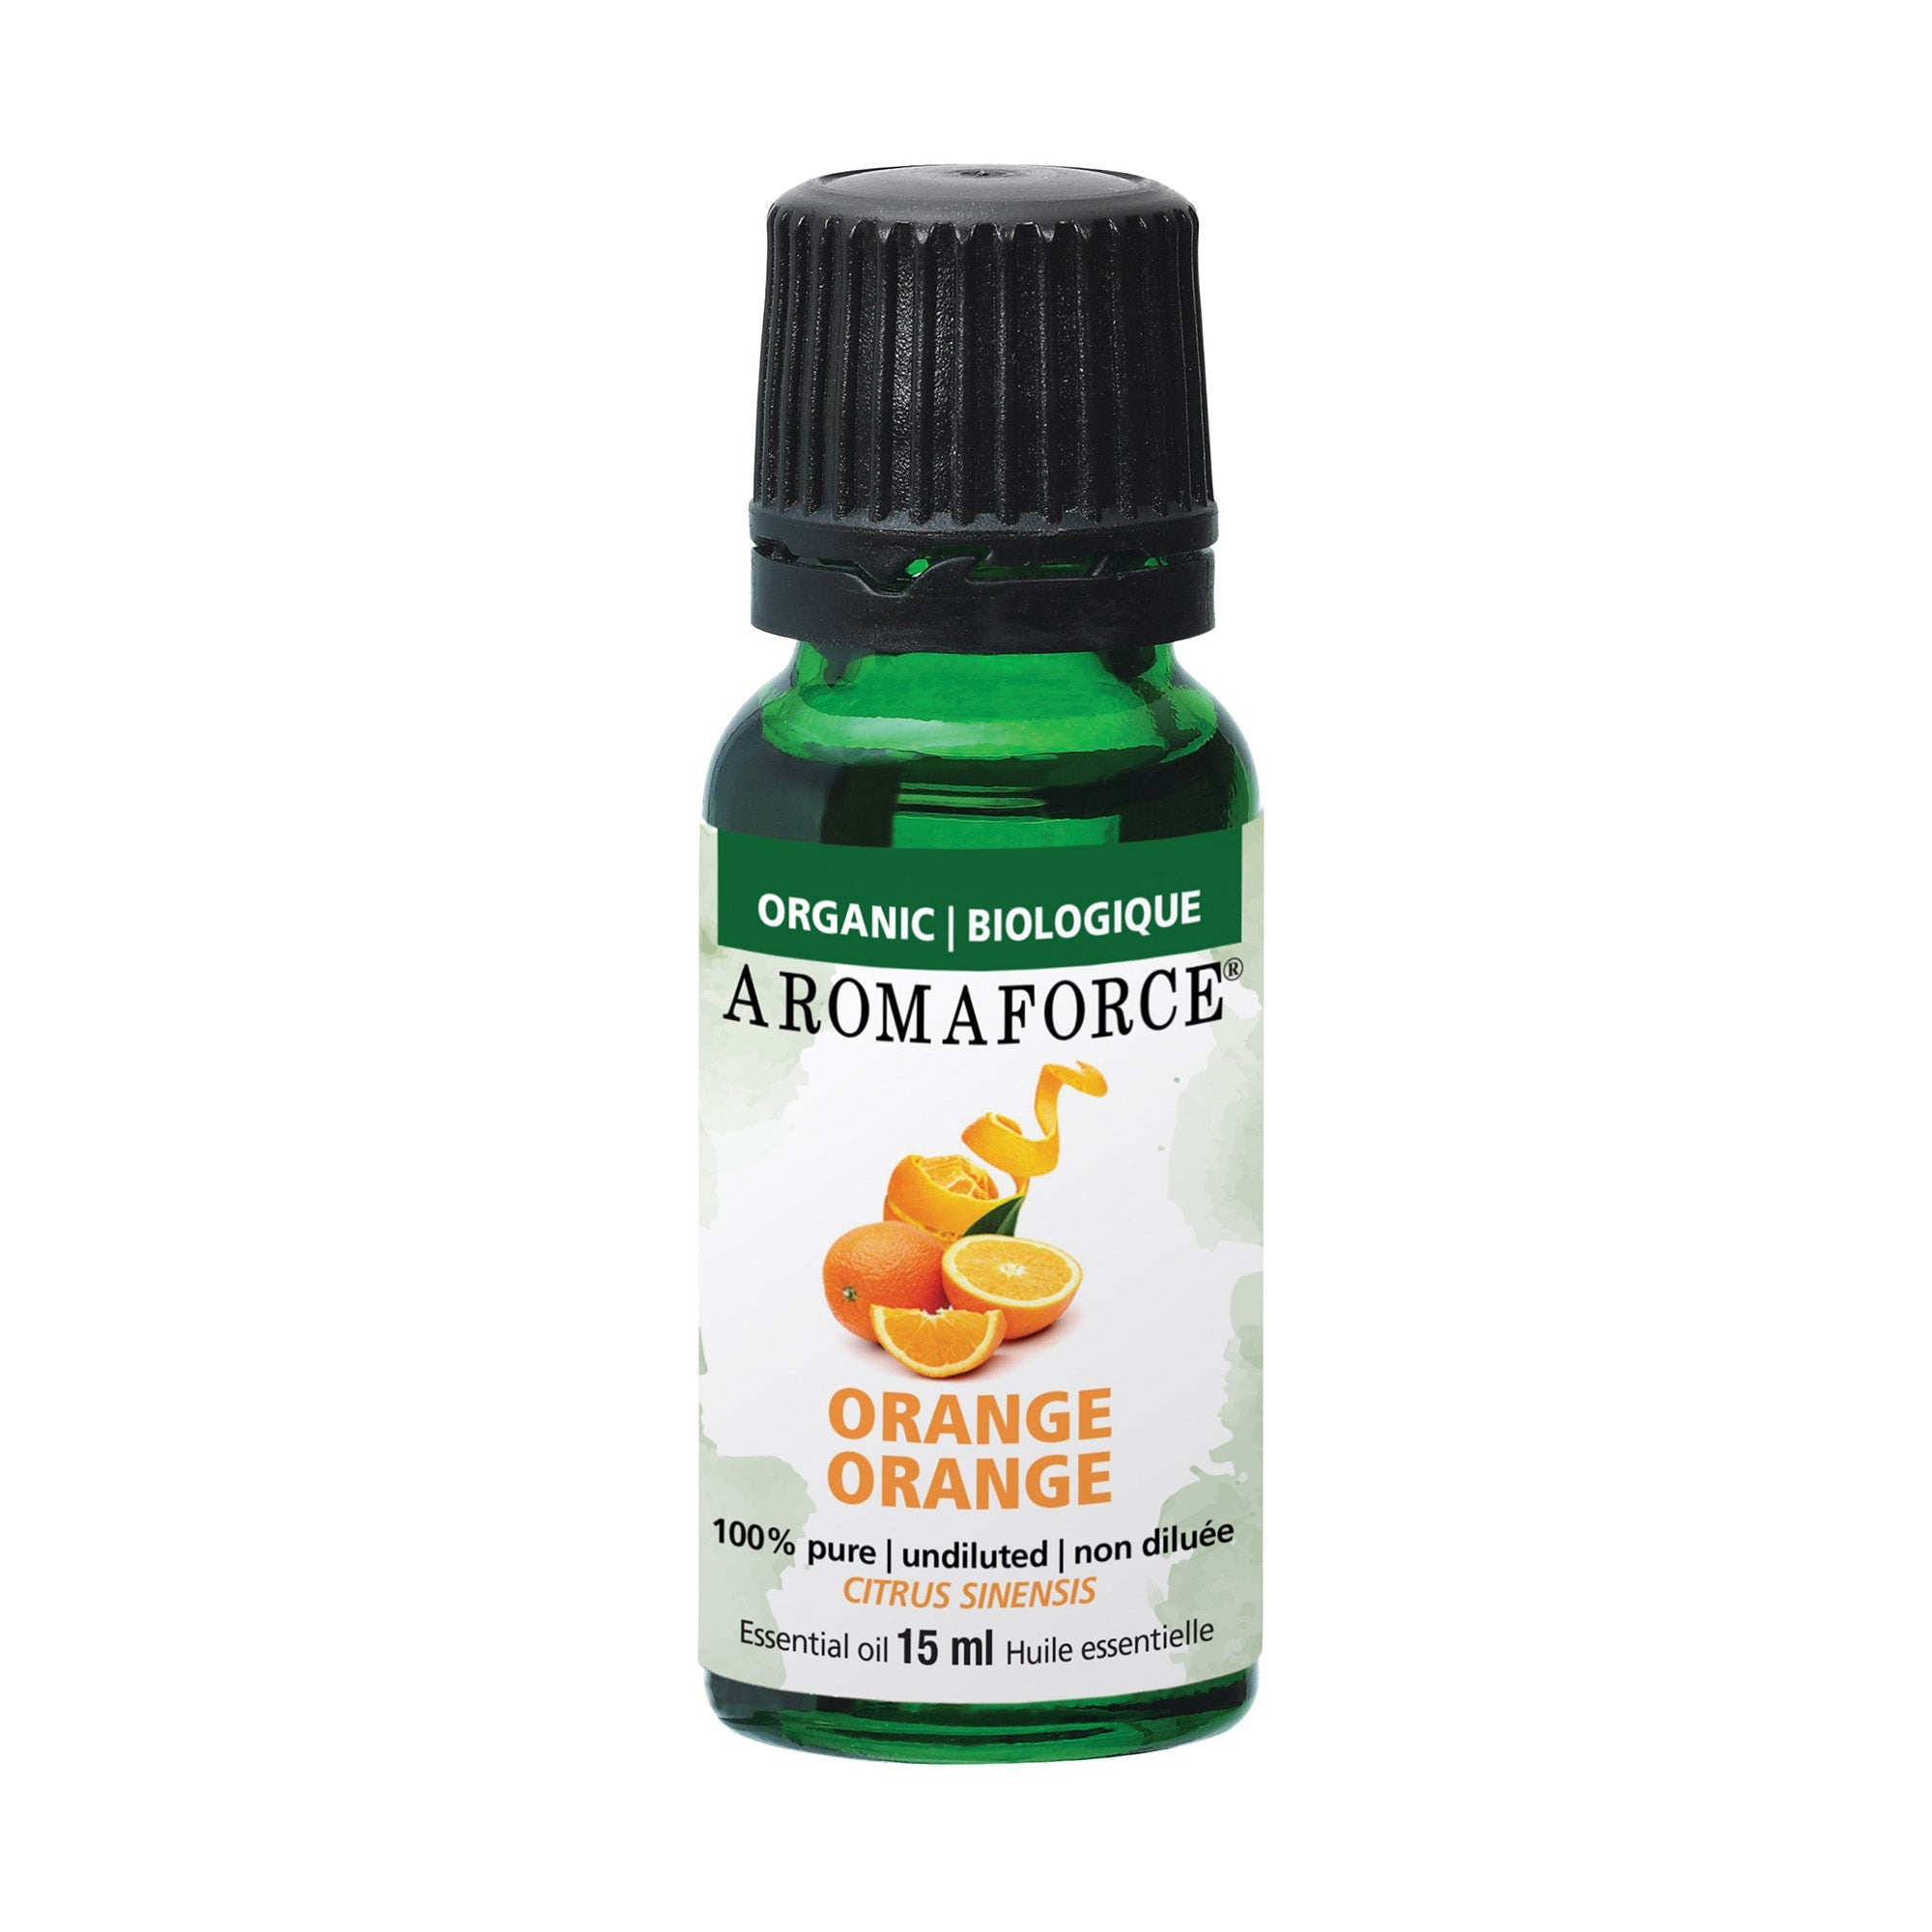 Organic Orange Essential Oil 100% pure and natural 15mL - Aromaforce - A.Vogel Canada